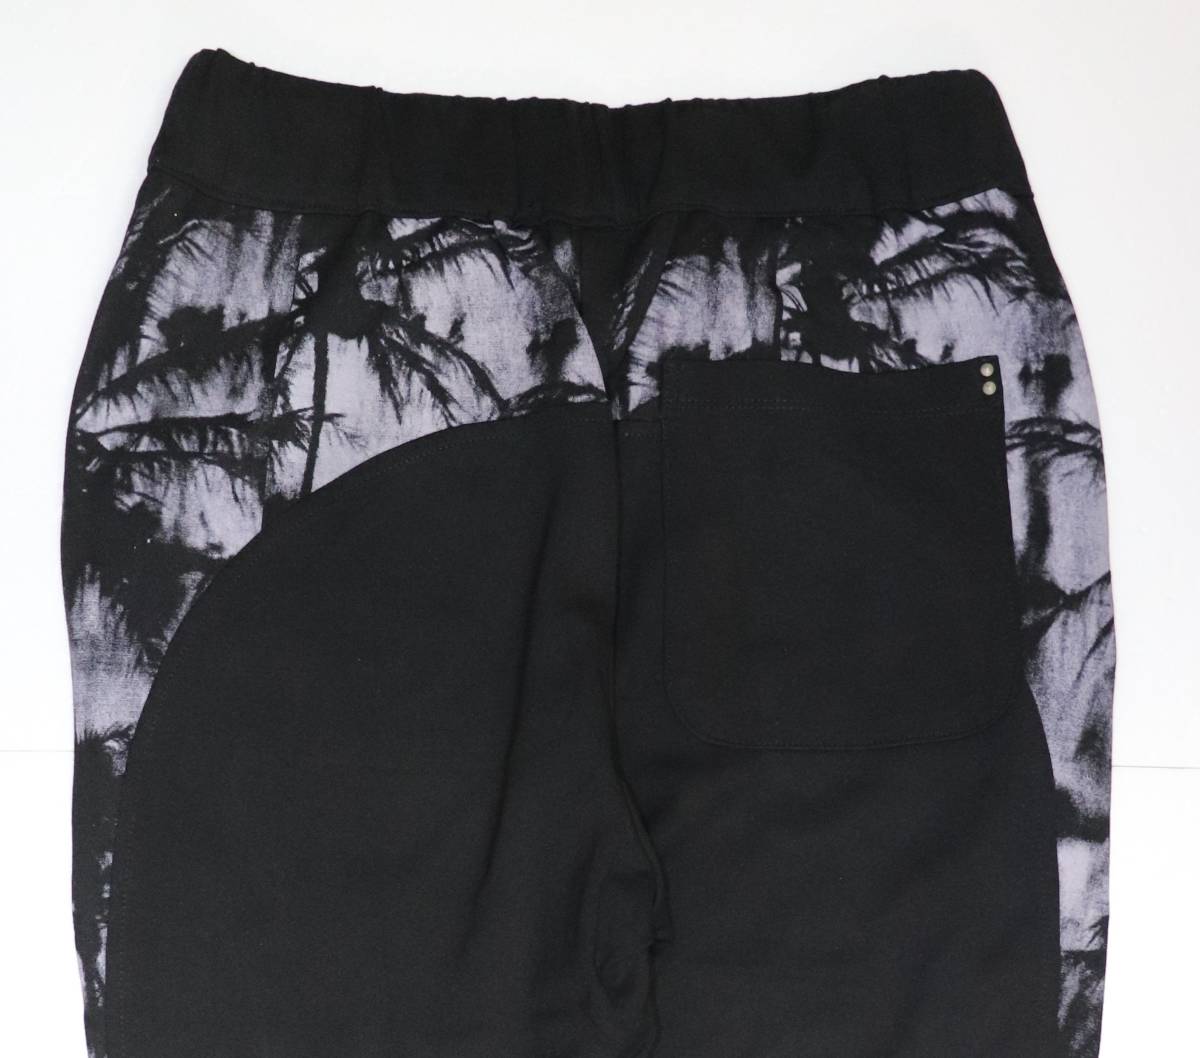  regular price 28000 new goods genuine article KMRii Rayon Jersey Track Pants pants 2001-PT05 2 mli6290